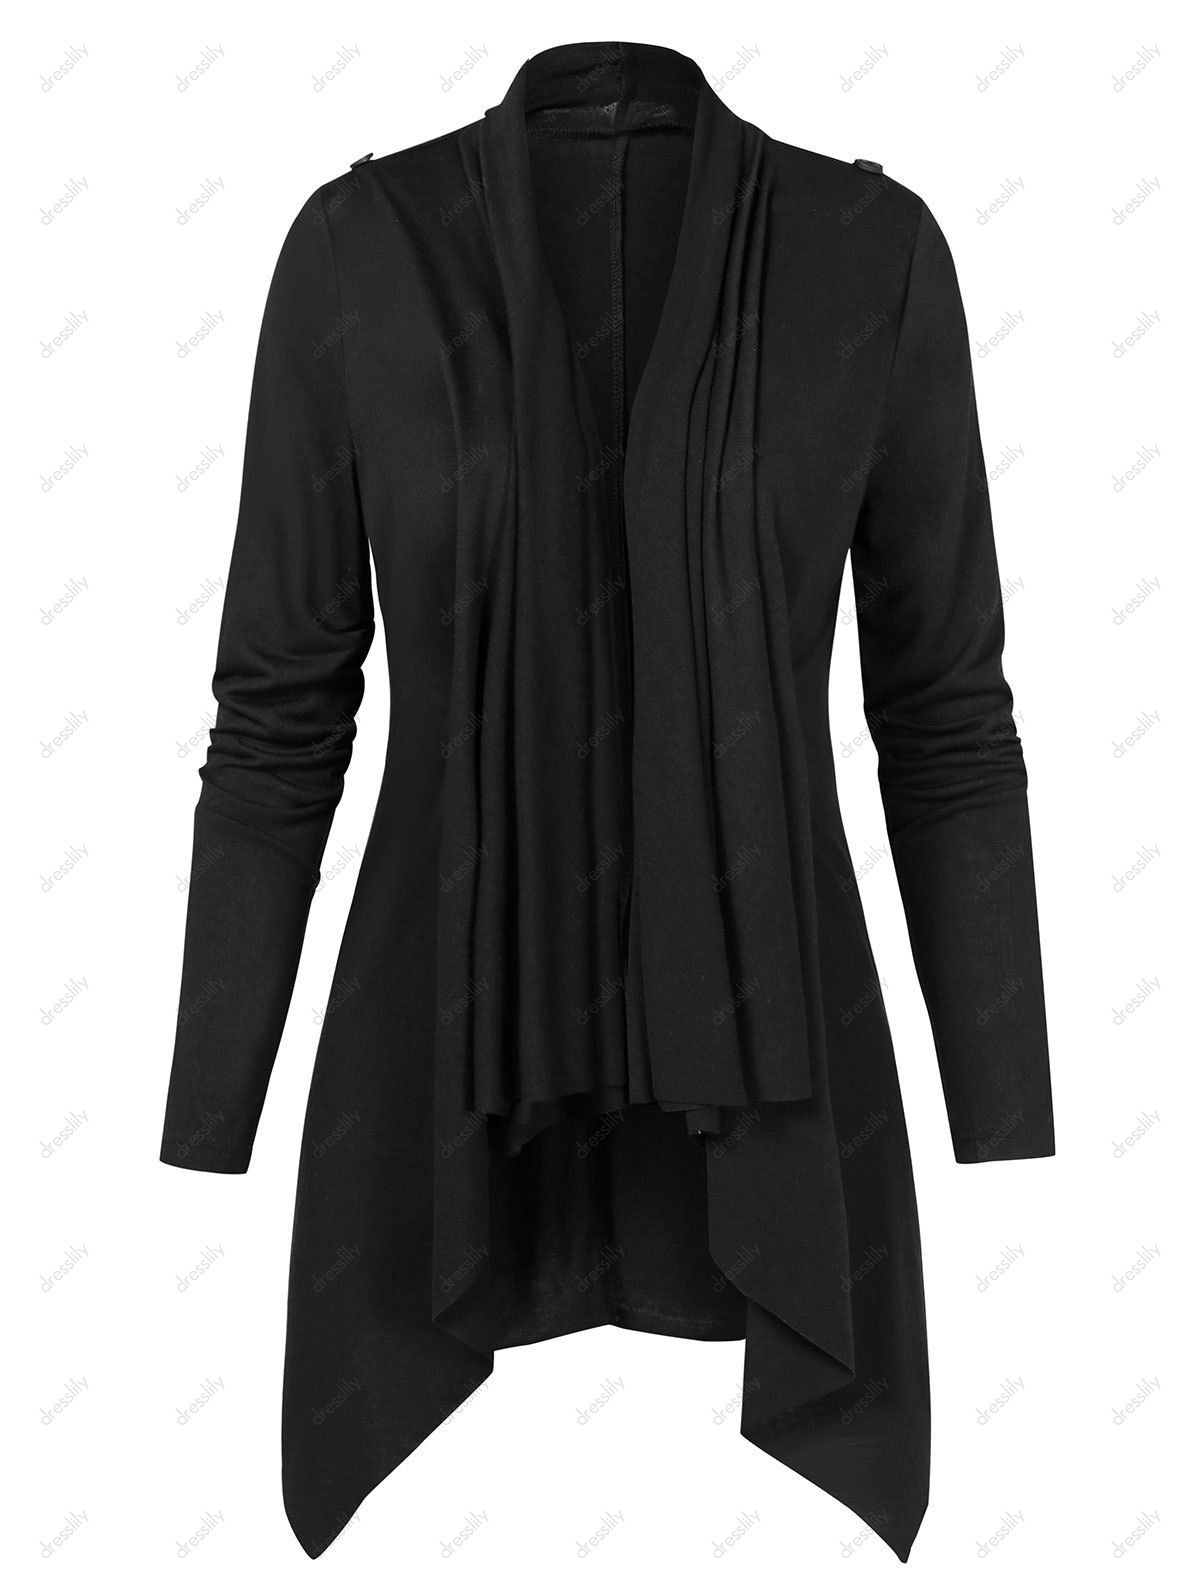 [32% OFF] 2020 Convertible Asymmetric Draped Cardigan In BLACK | DressLily